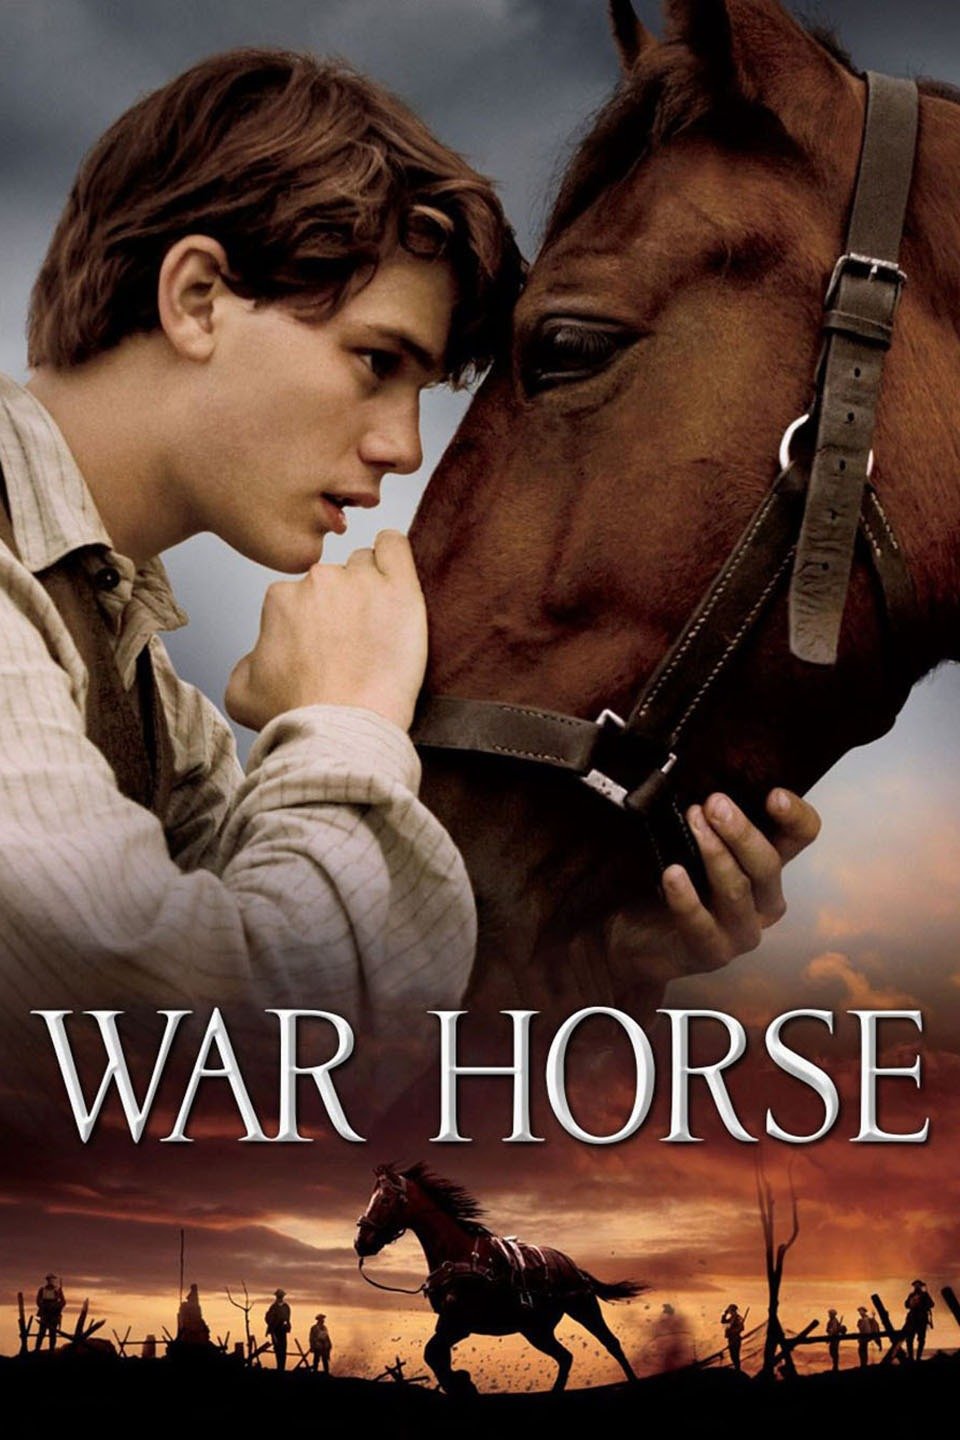 [MINI-HD] War Horse (2011) ม้าศึกจารึกโลก [1080p] [พากย์ไทย 5.1 + อังกฤษ 5.1] [บรรยายไทย + อังกฤษ] [Blu-ray.H.264] [Modified] [เสียงไทย + ซับไทย] [ONE2UP]